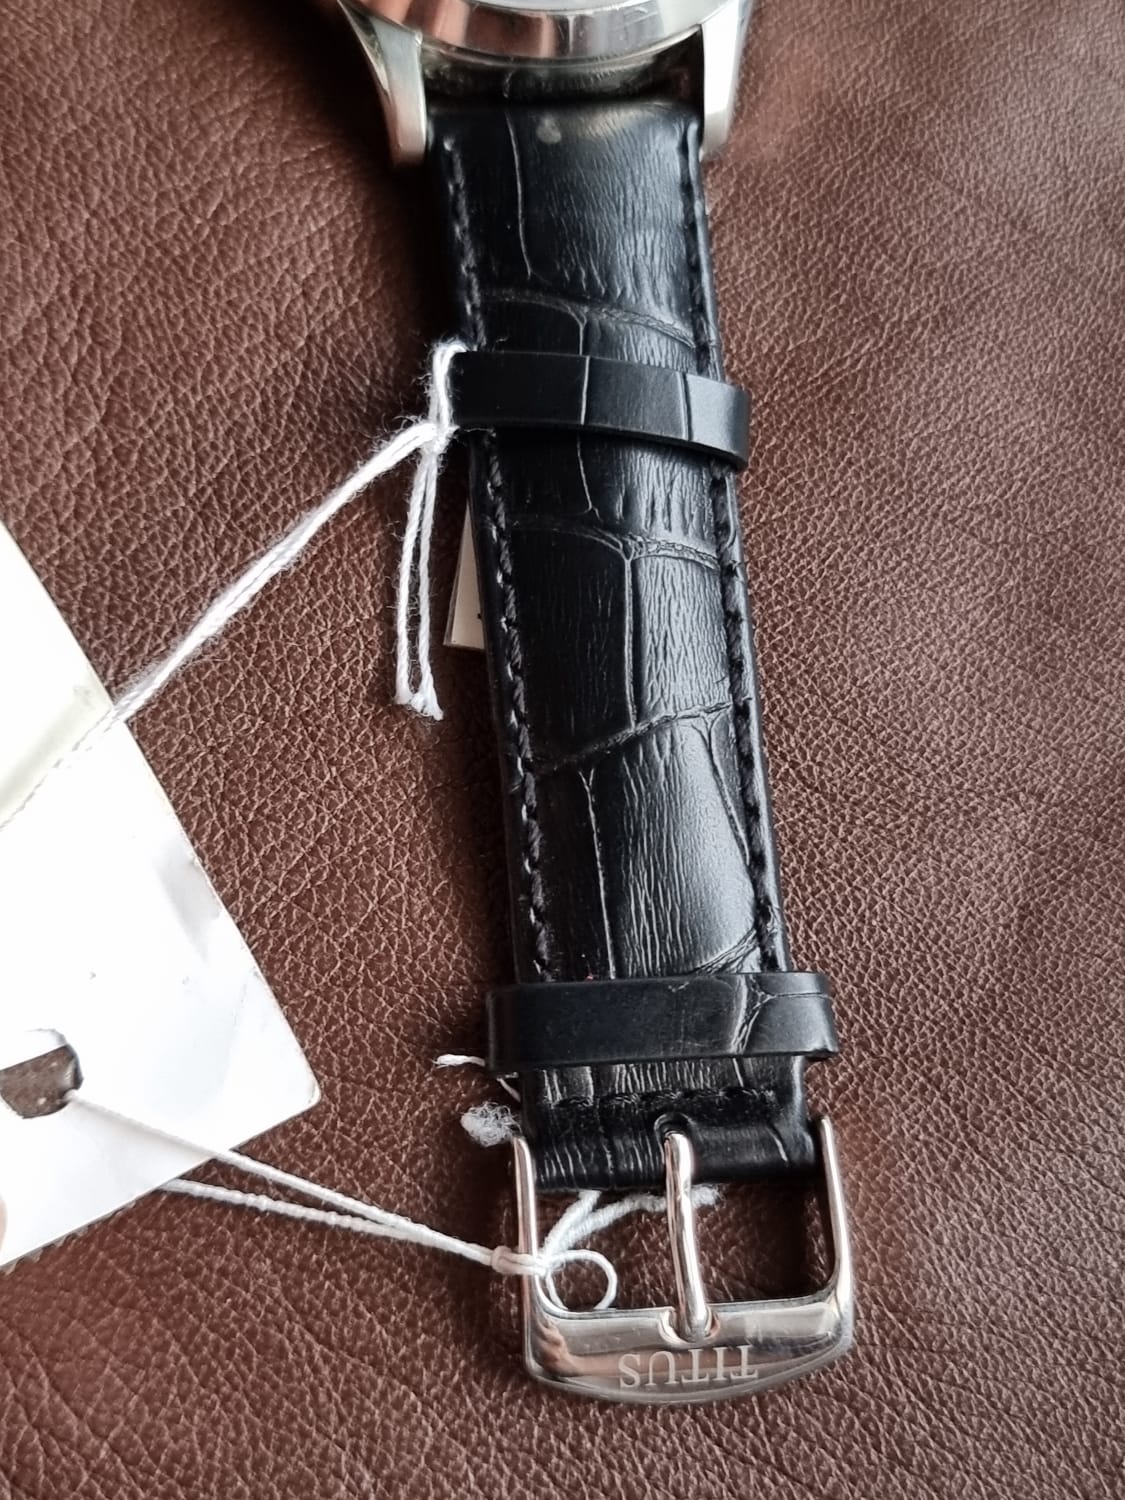 Titus Automatic Black leather Strap Black dial 41mm Dial Size